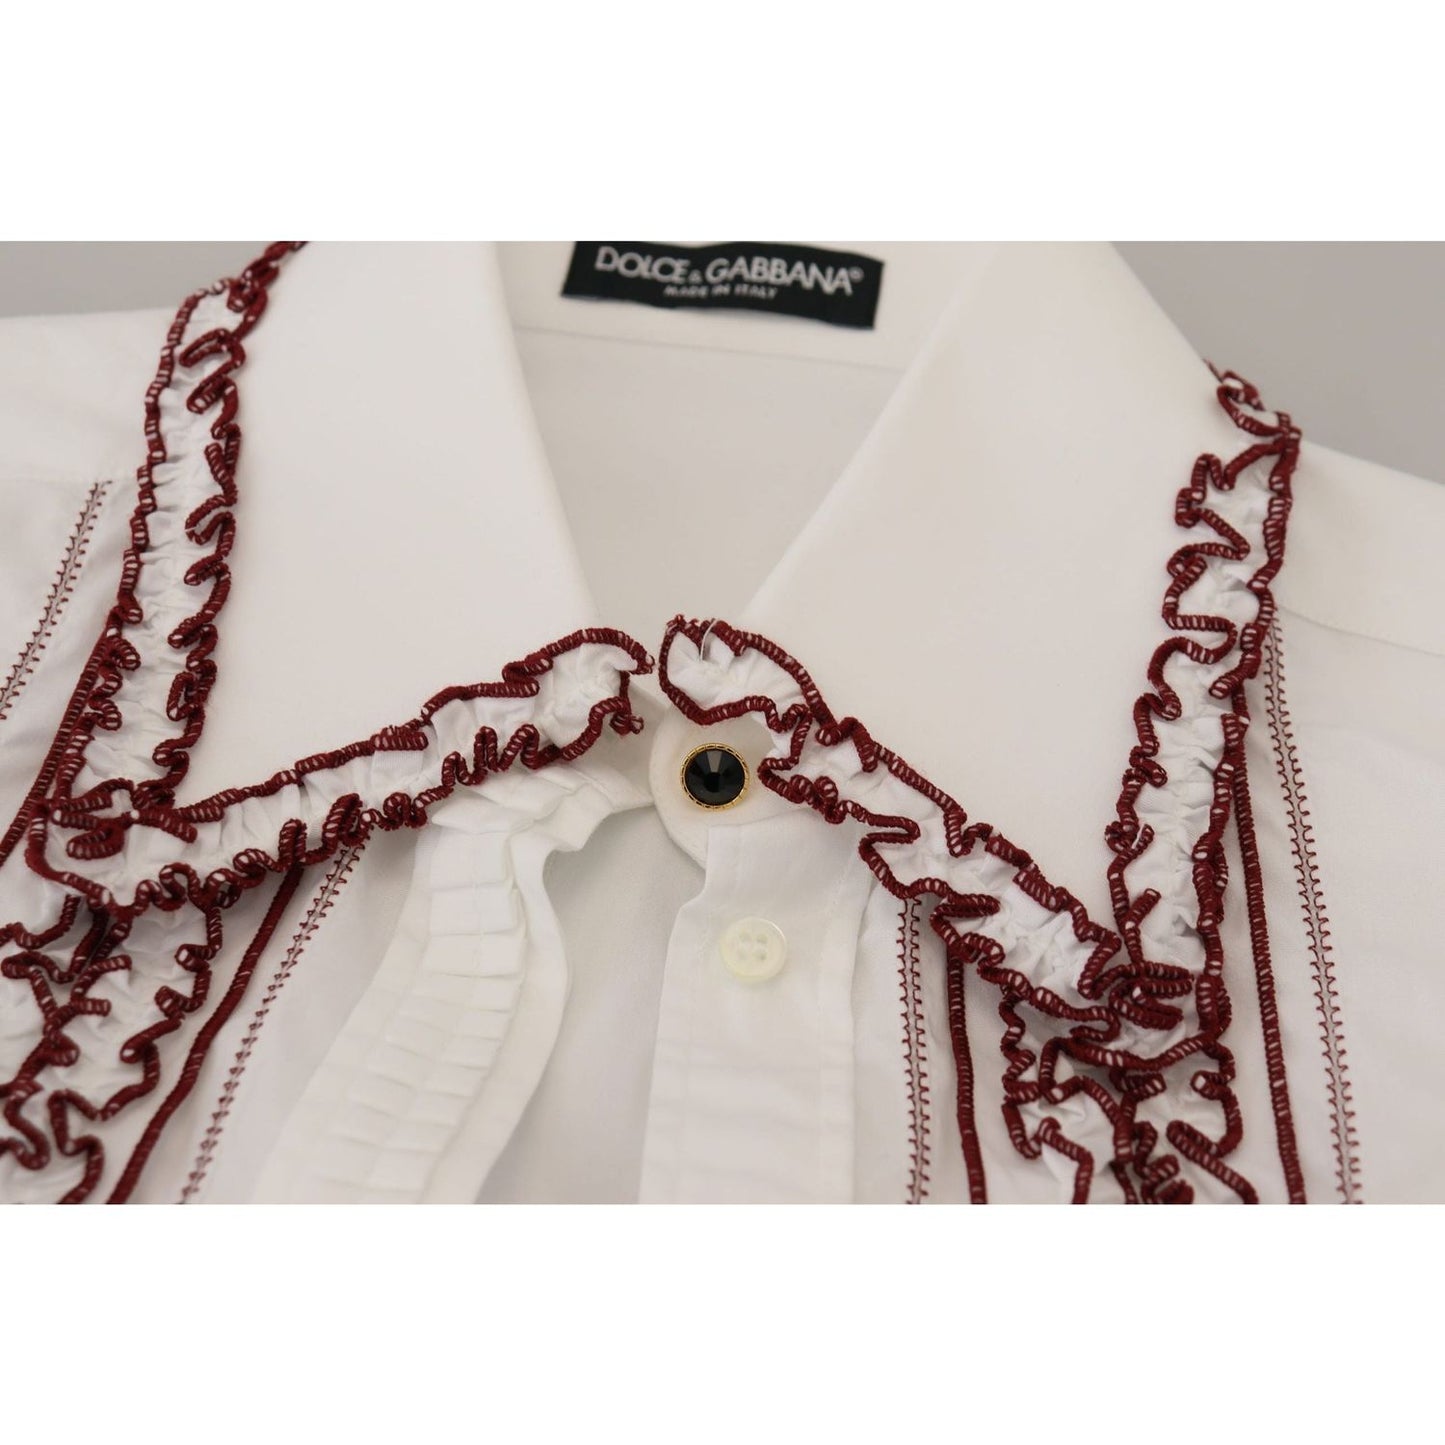 Dolce & Gabbana Elegant White Cotton Polo Top white-lace-long-sleeves-ruffle-collar-top